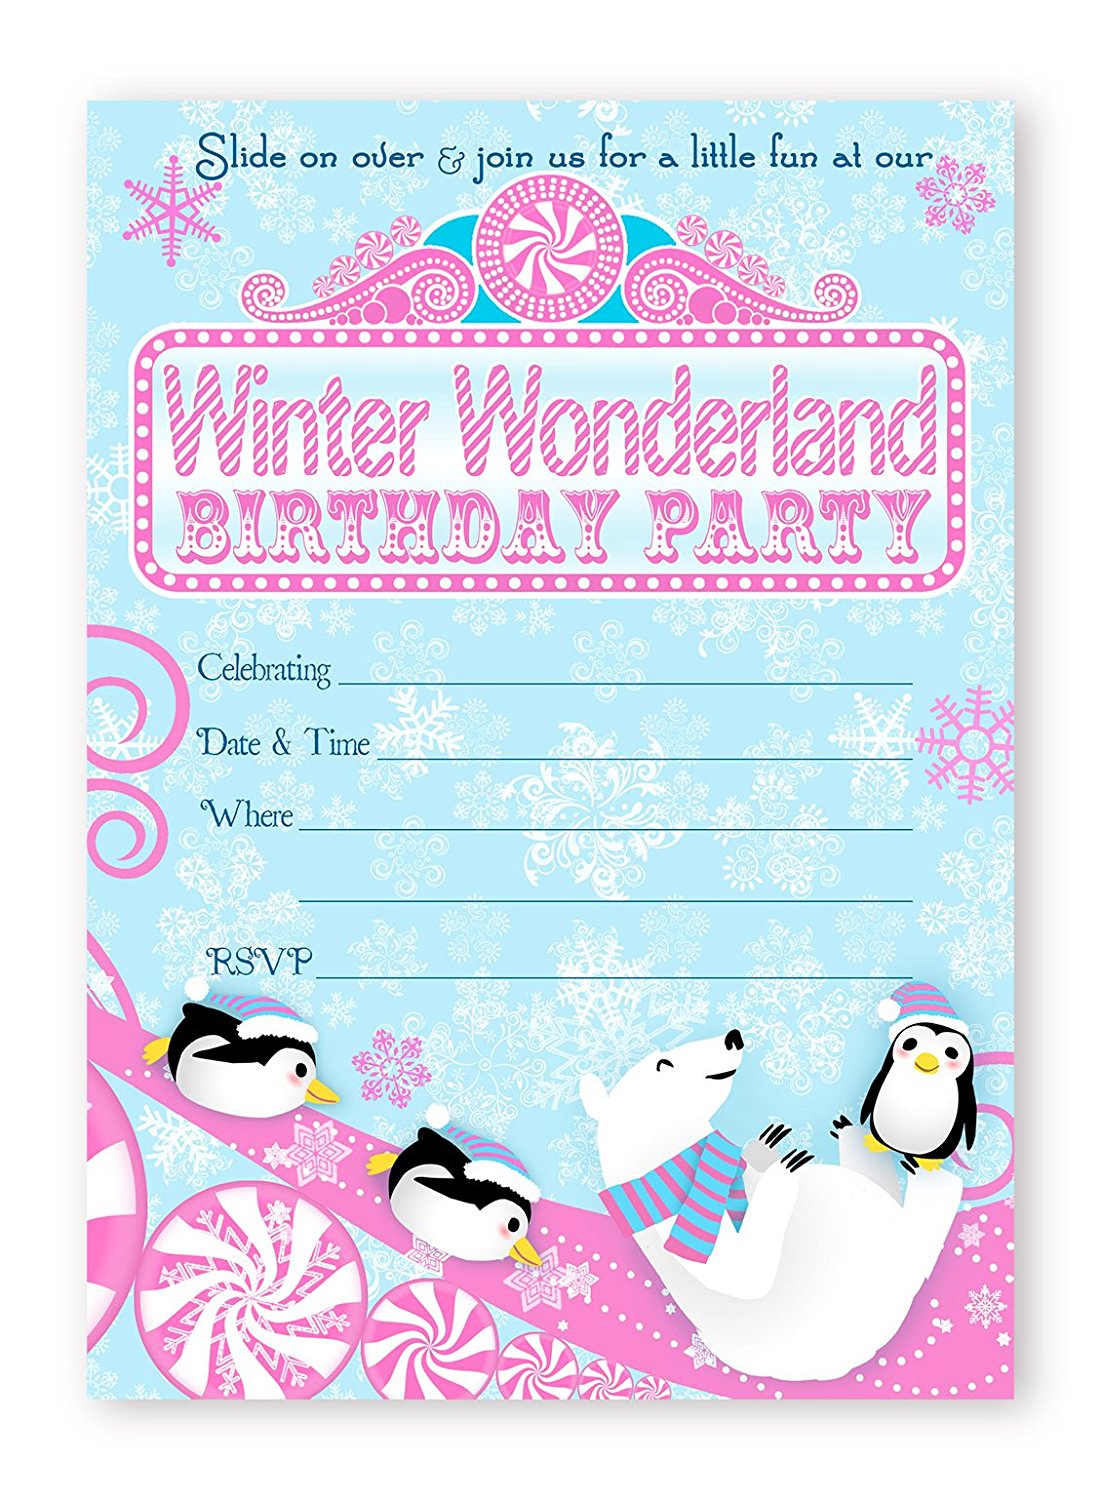 winter-wonderland-invitations-pink-10-invitations-10-envelopes-winter-onederland